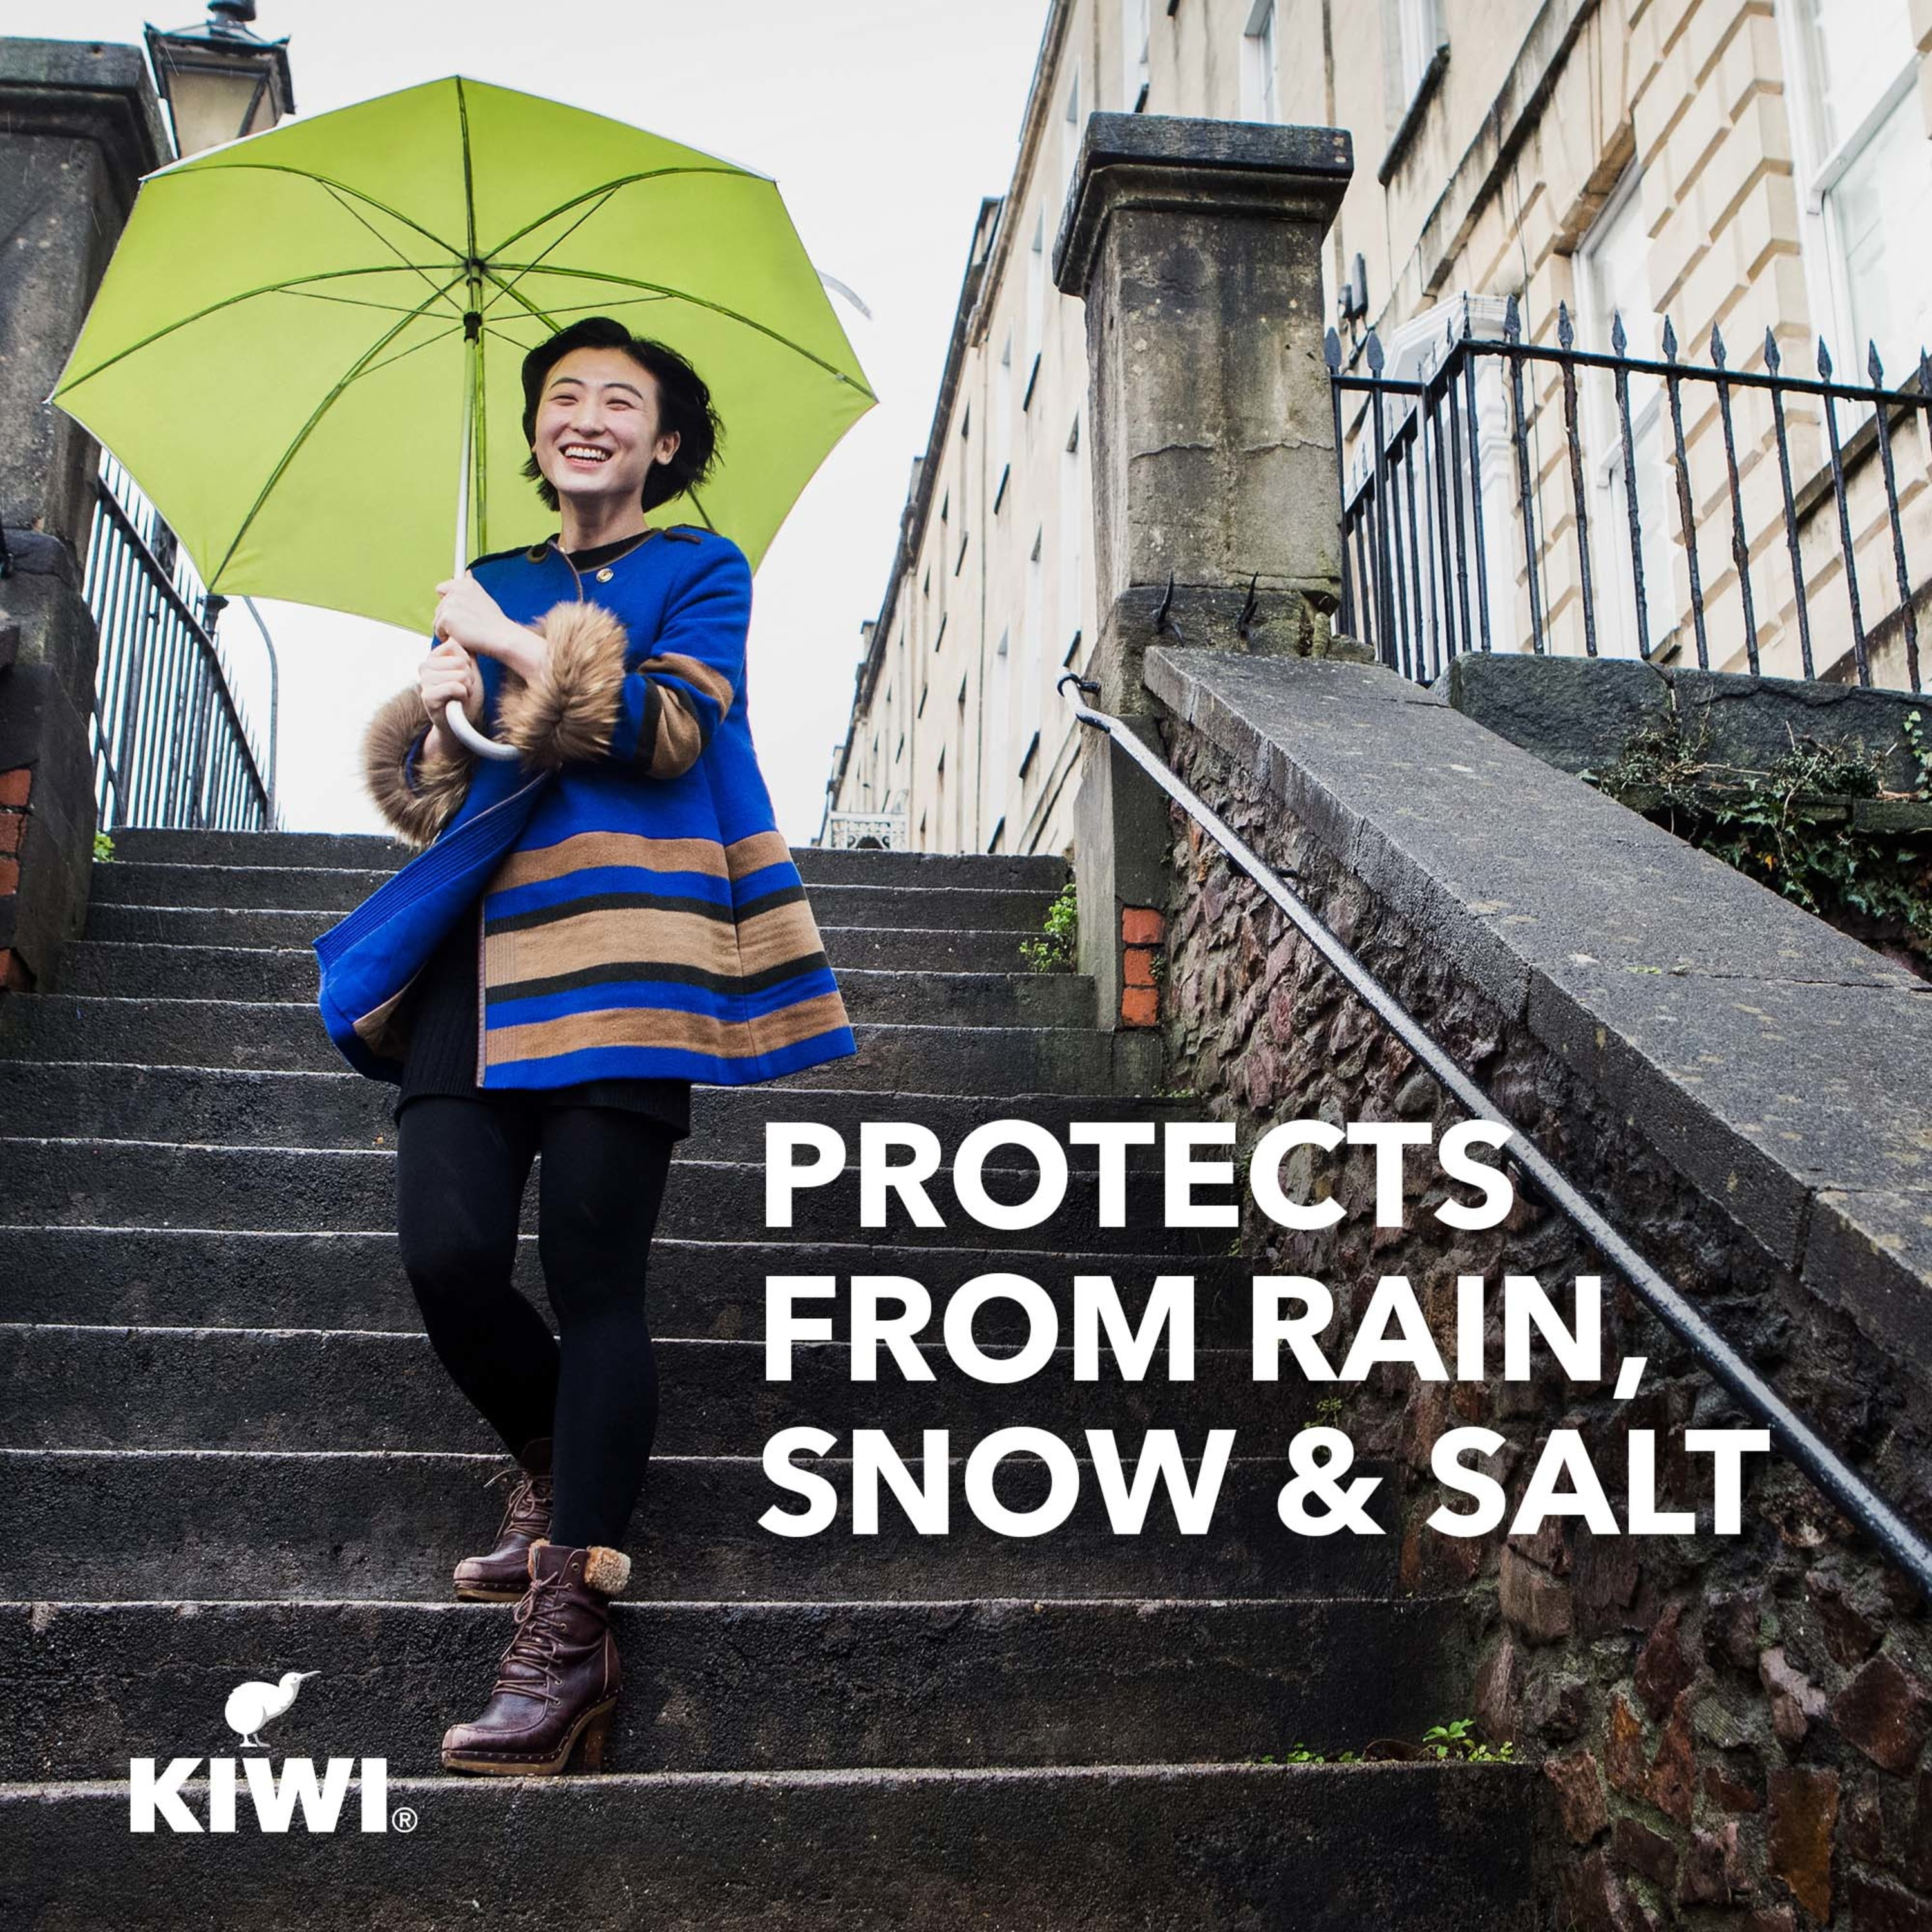 Kiwi Tough Silicone Protection Boots Waterproofer Aerosol Spray